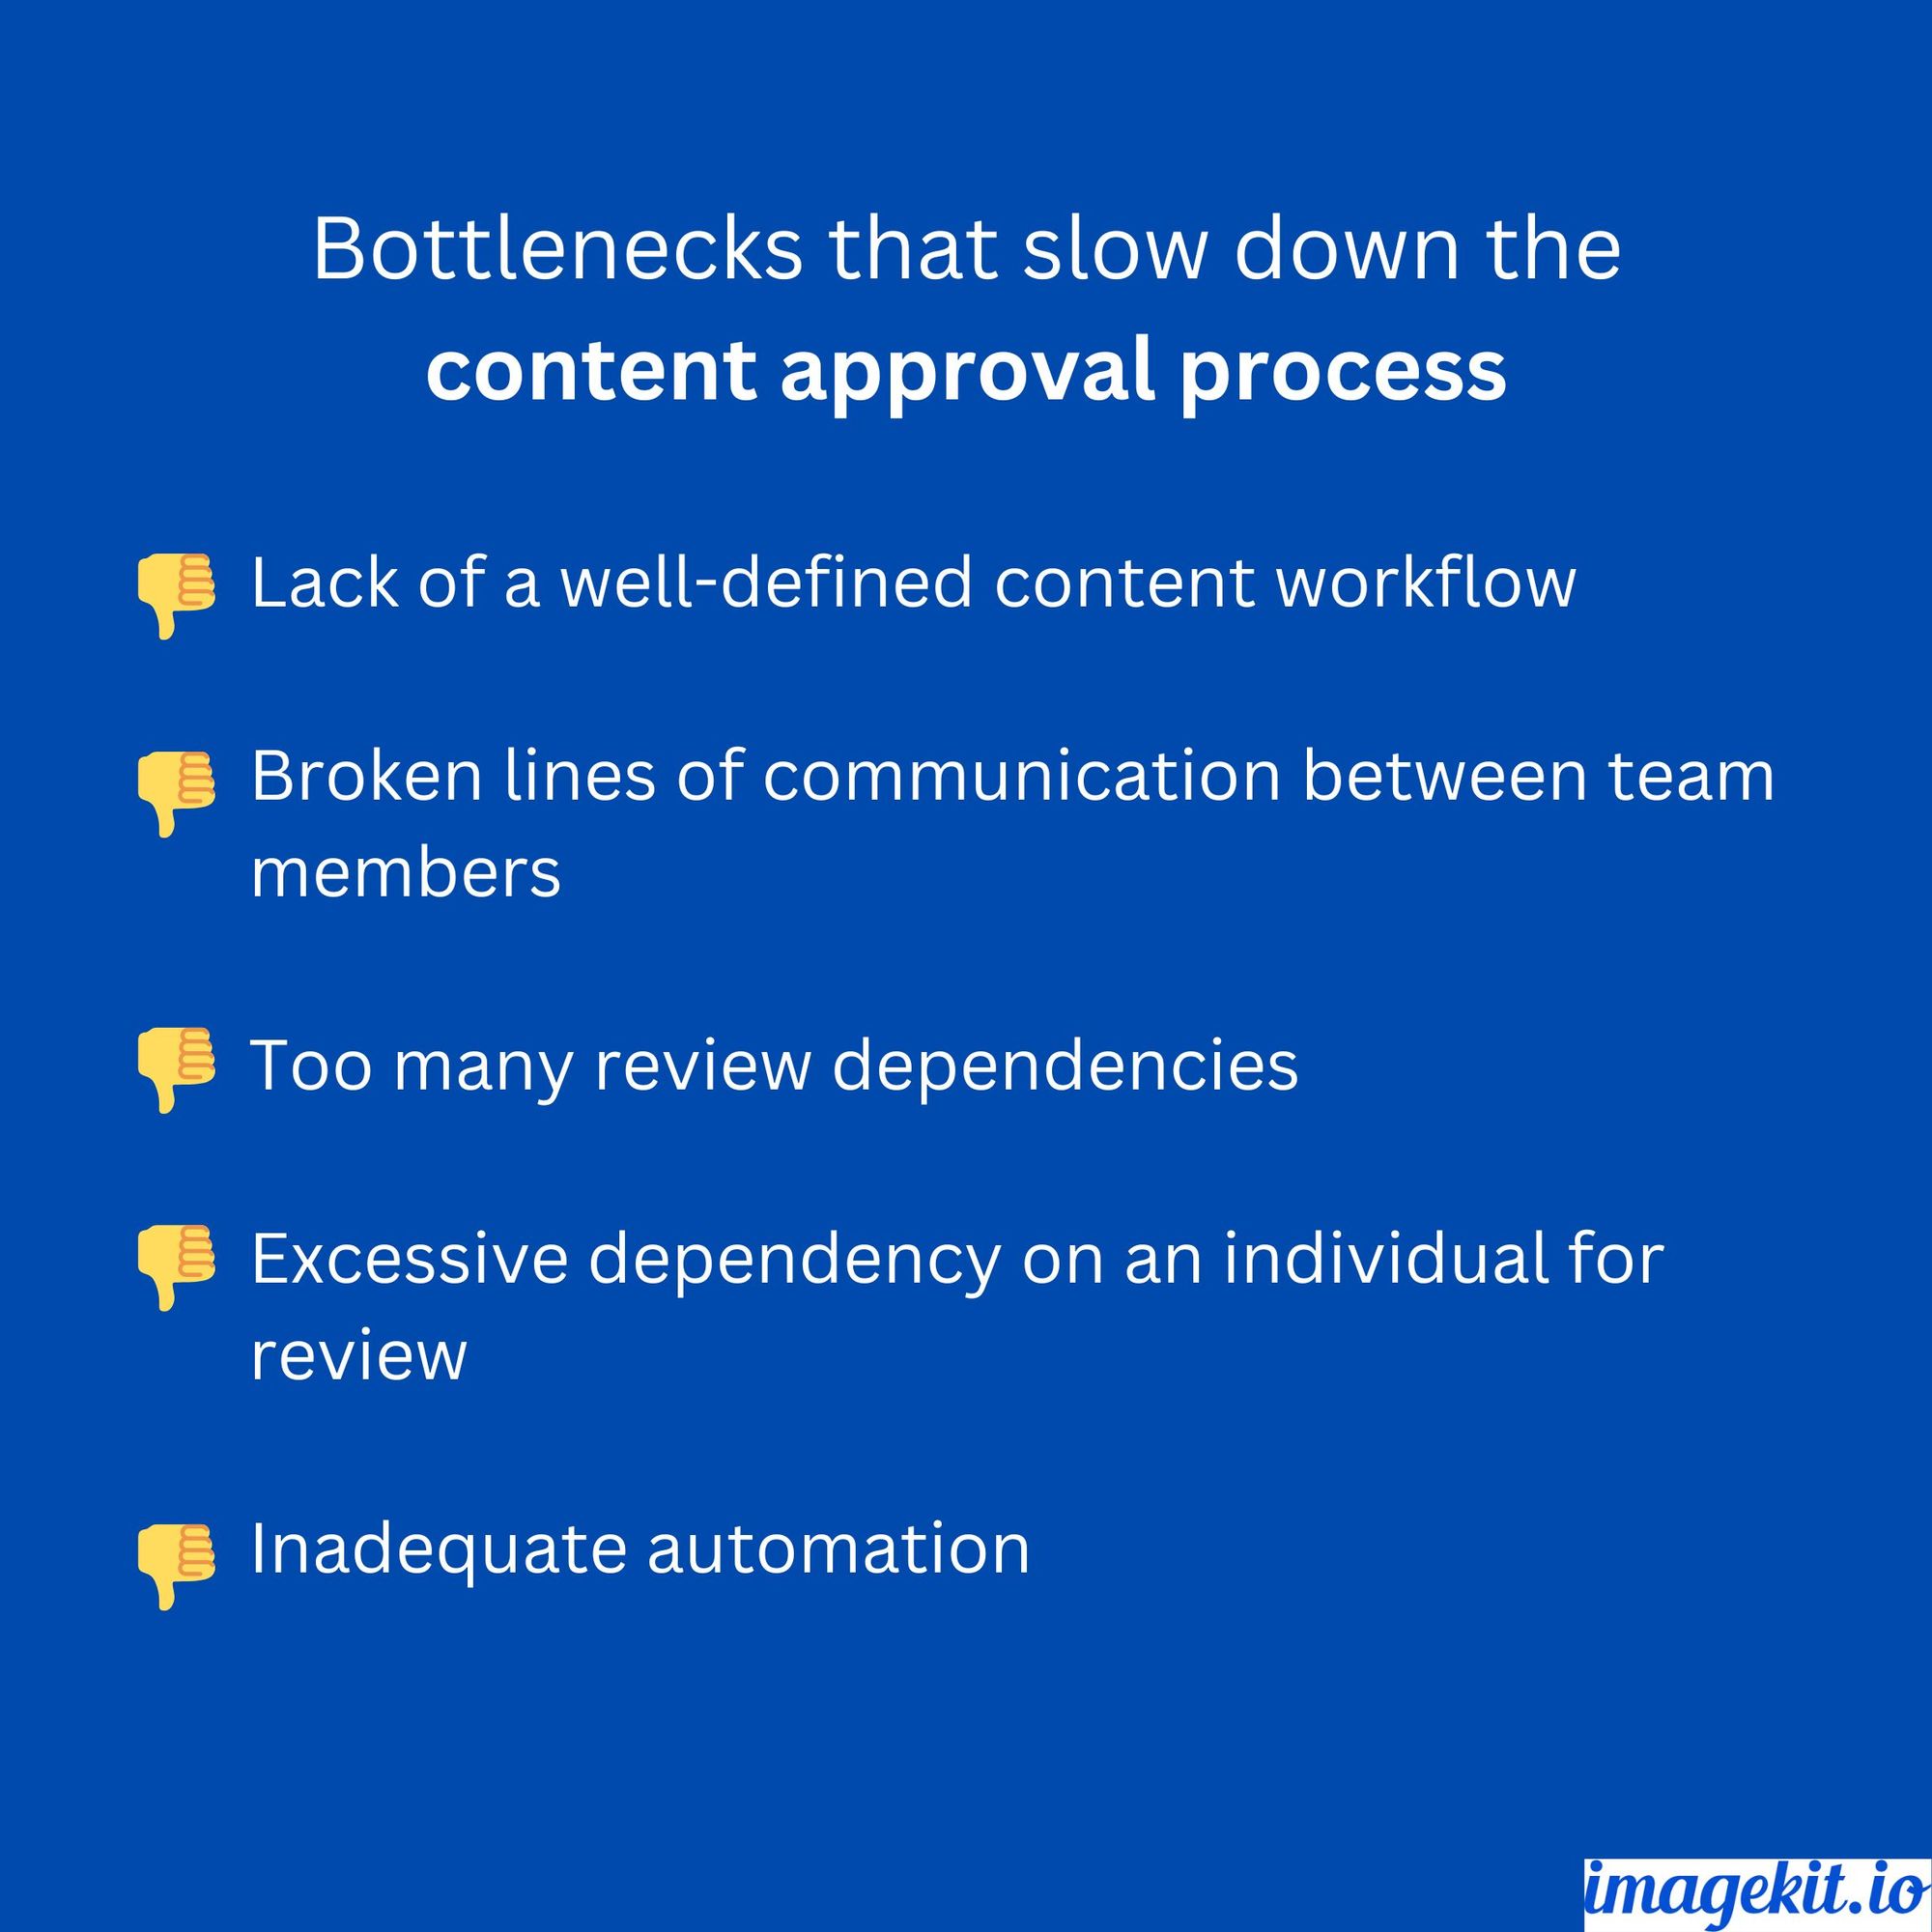 Bottlenecks in content approval process - ImageKit blog